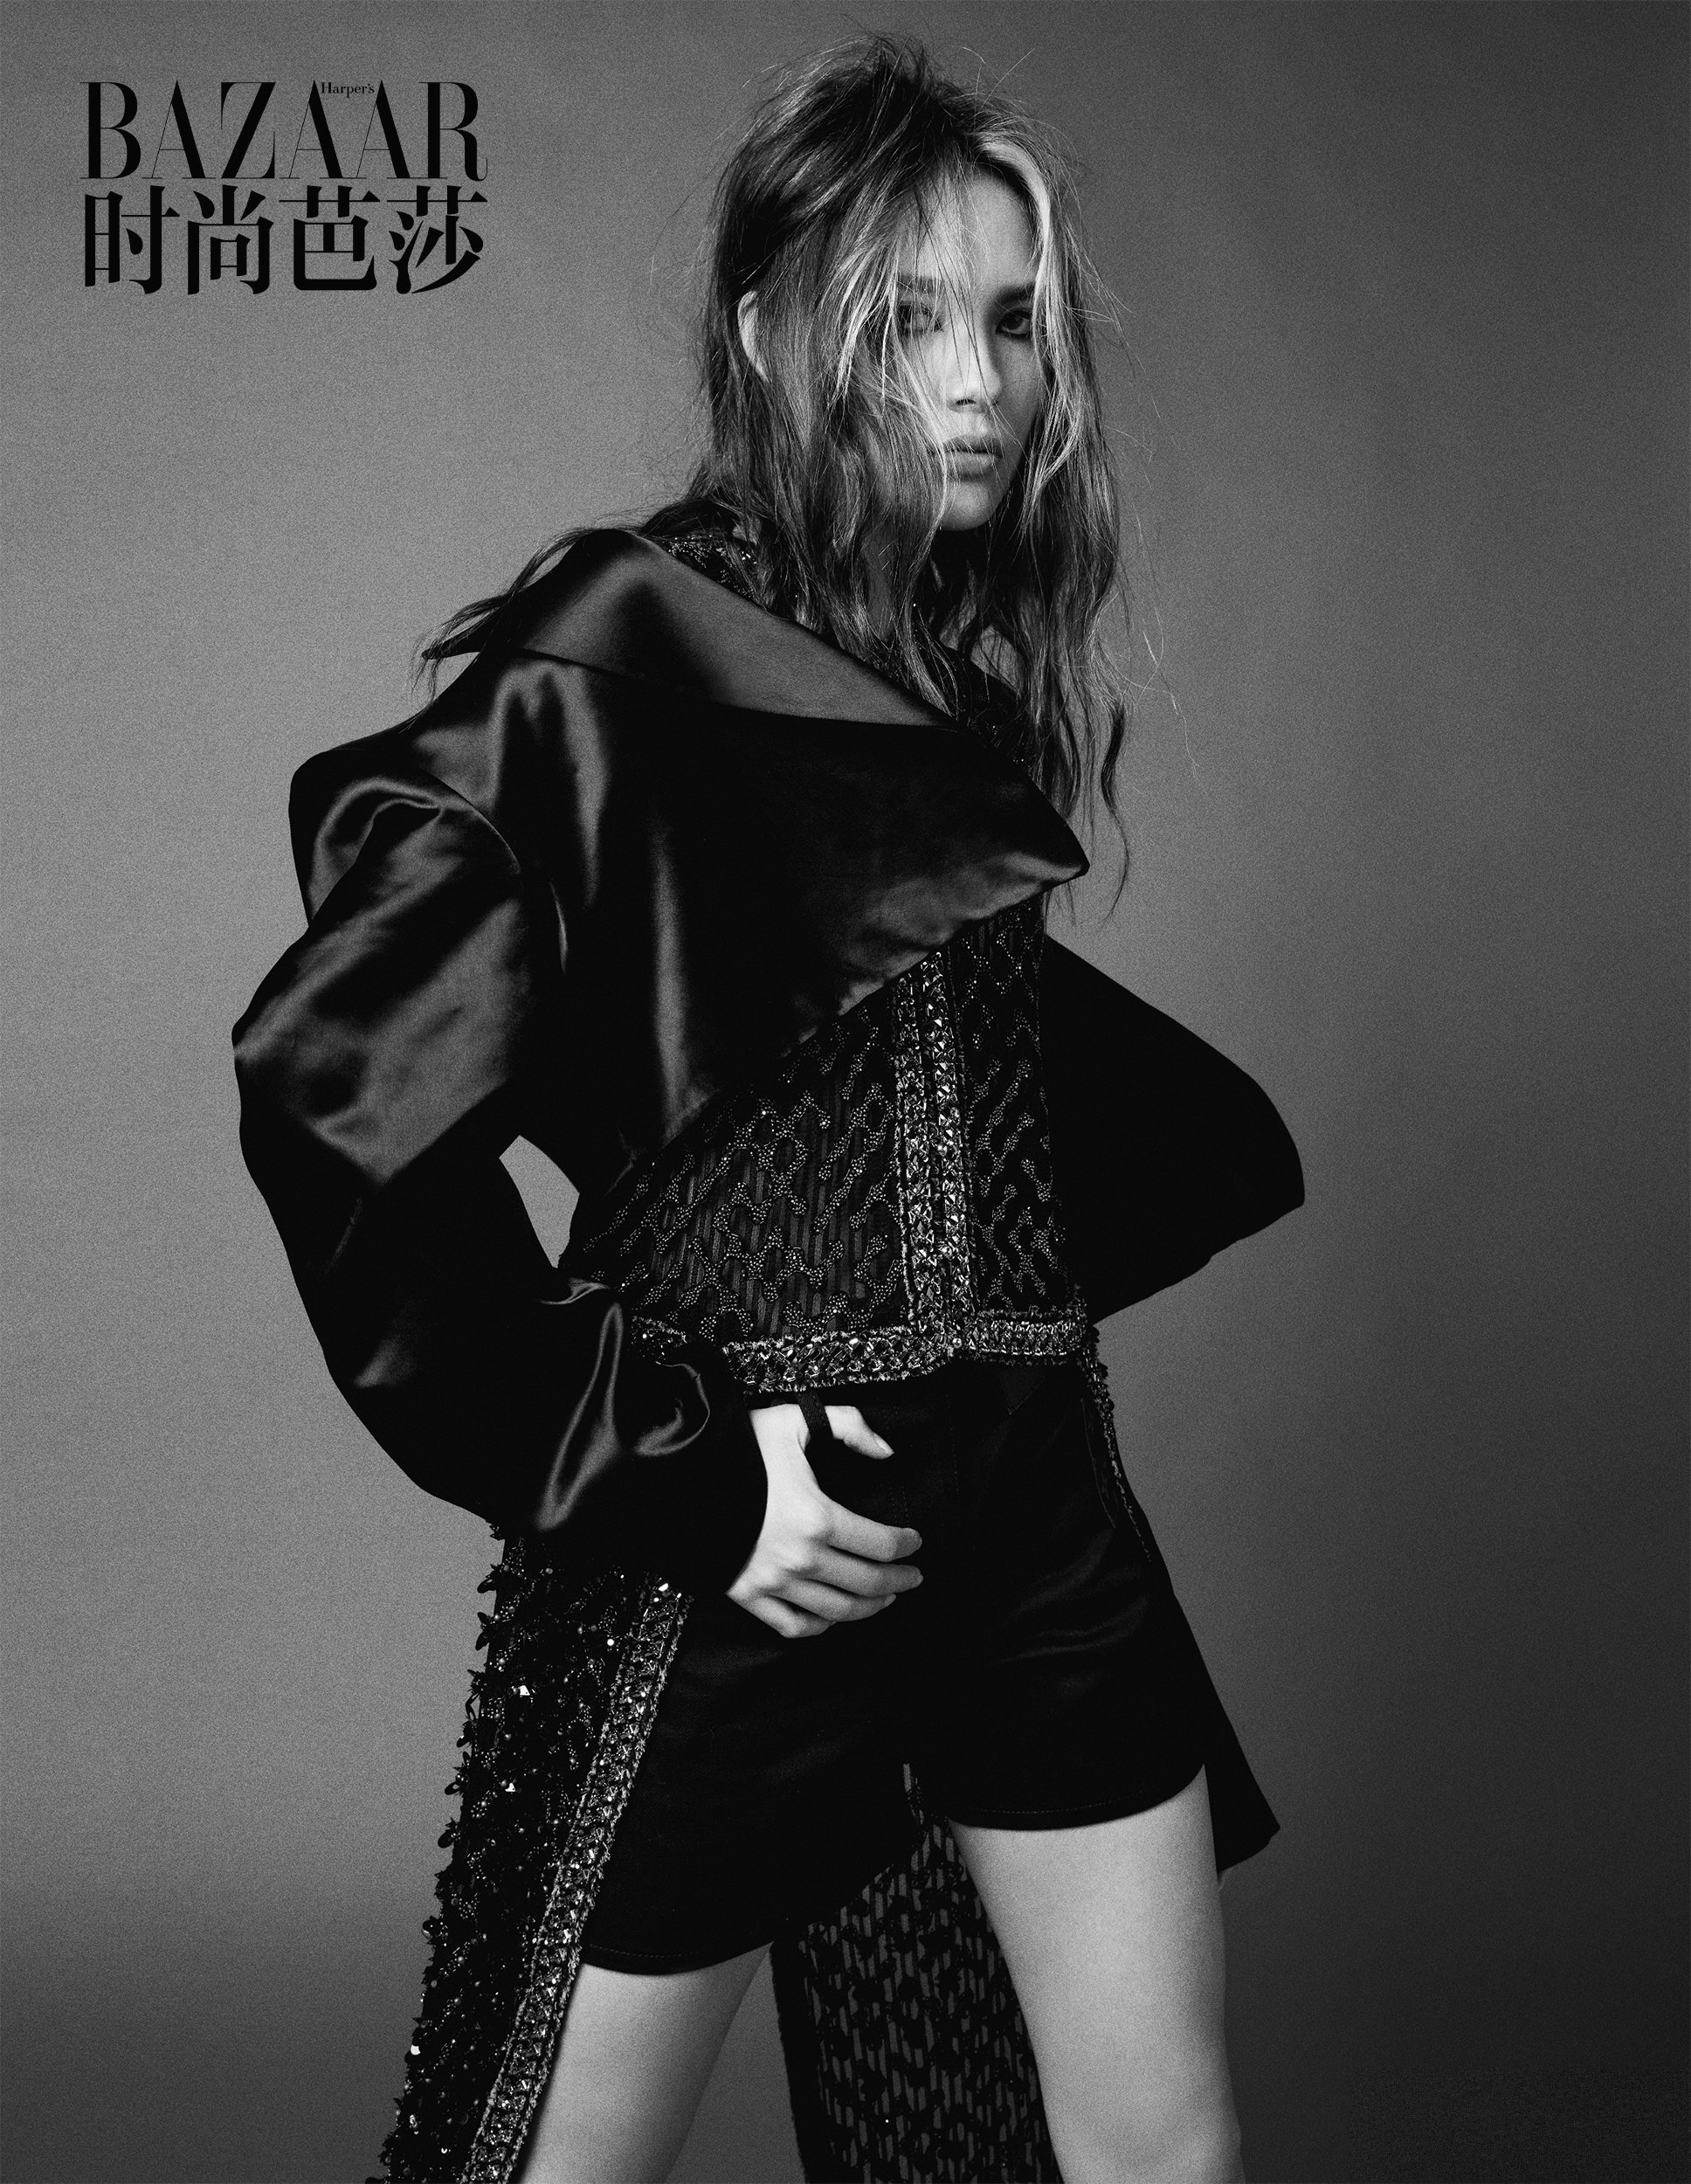 EILEEN GU for Vogue Magazine, China February 2022 – HawtCelebs